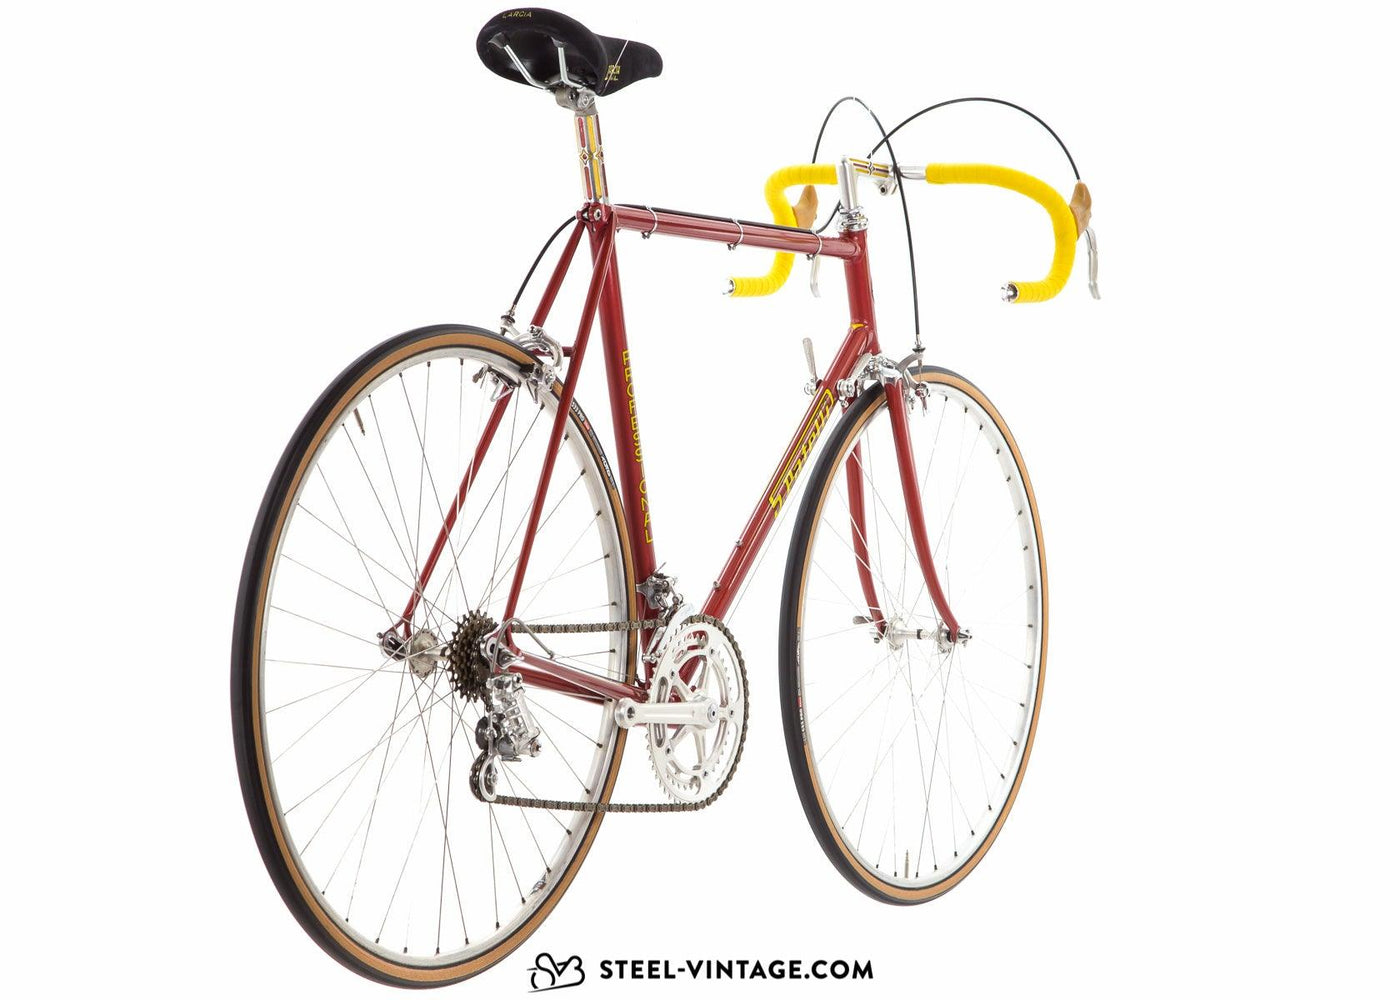 Patelli Professional Classic Road Bicycle 1970s - Steel Vintage Bikes